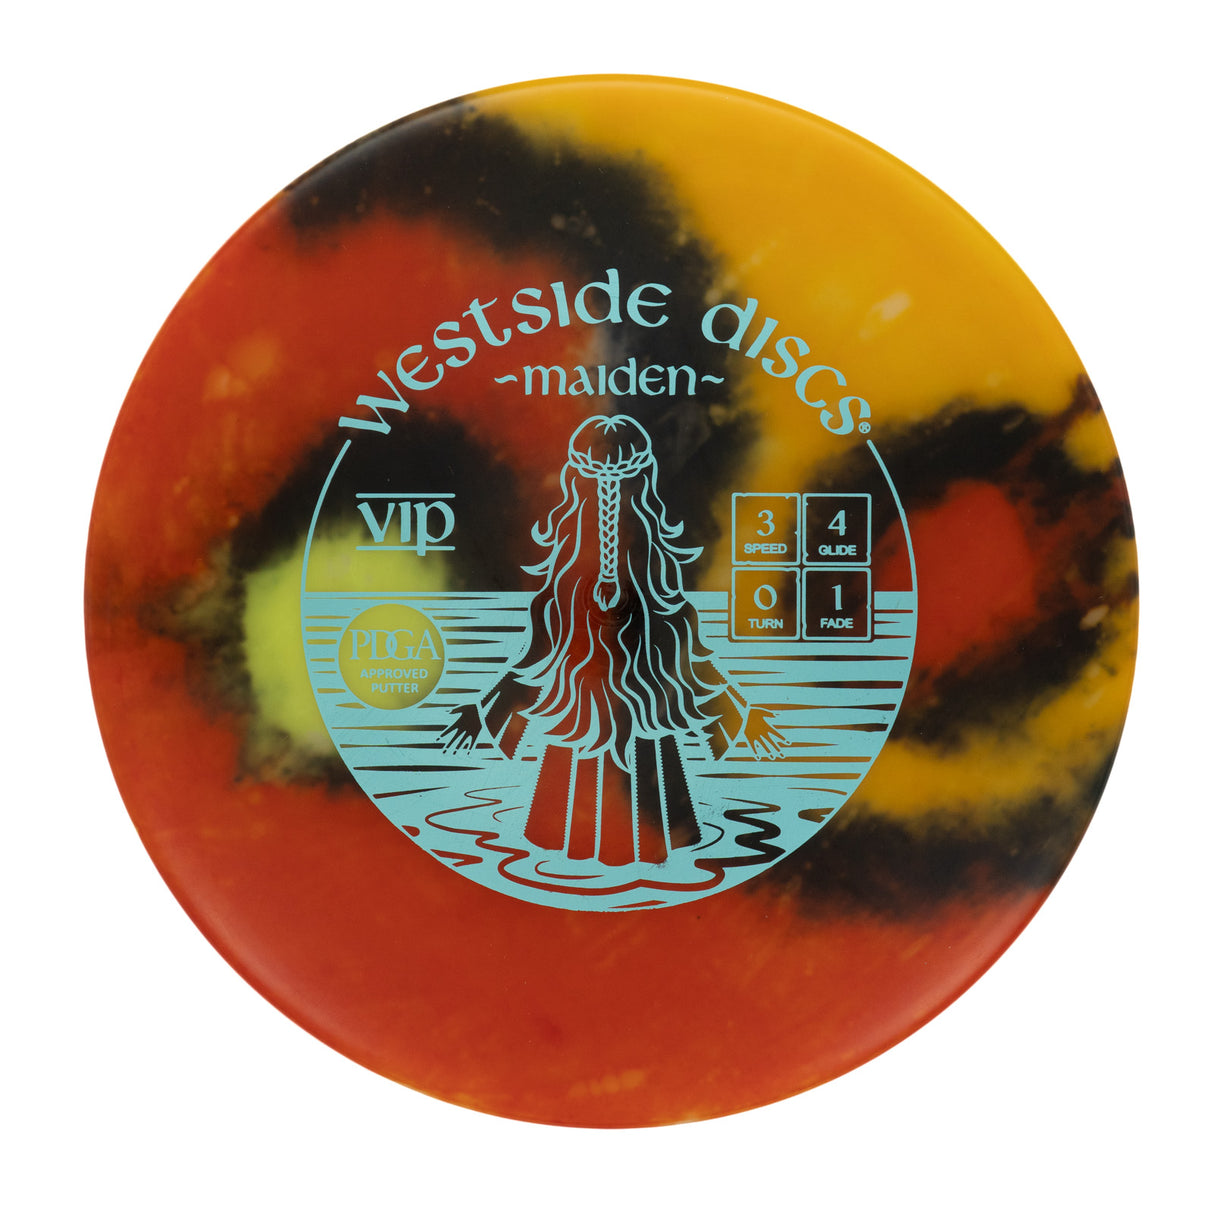 Westside Maiden - MyDye VIP 175g | Style 0002